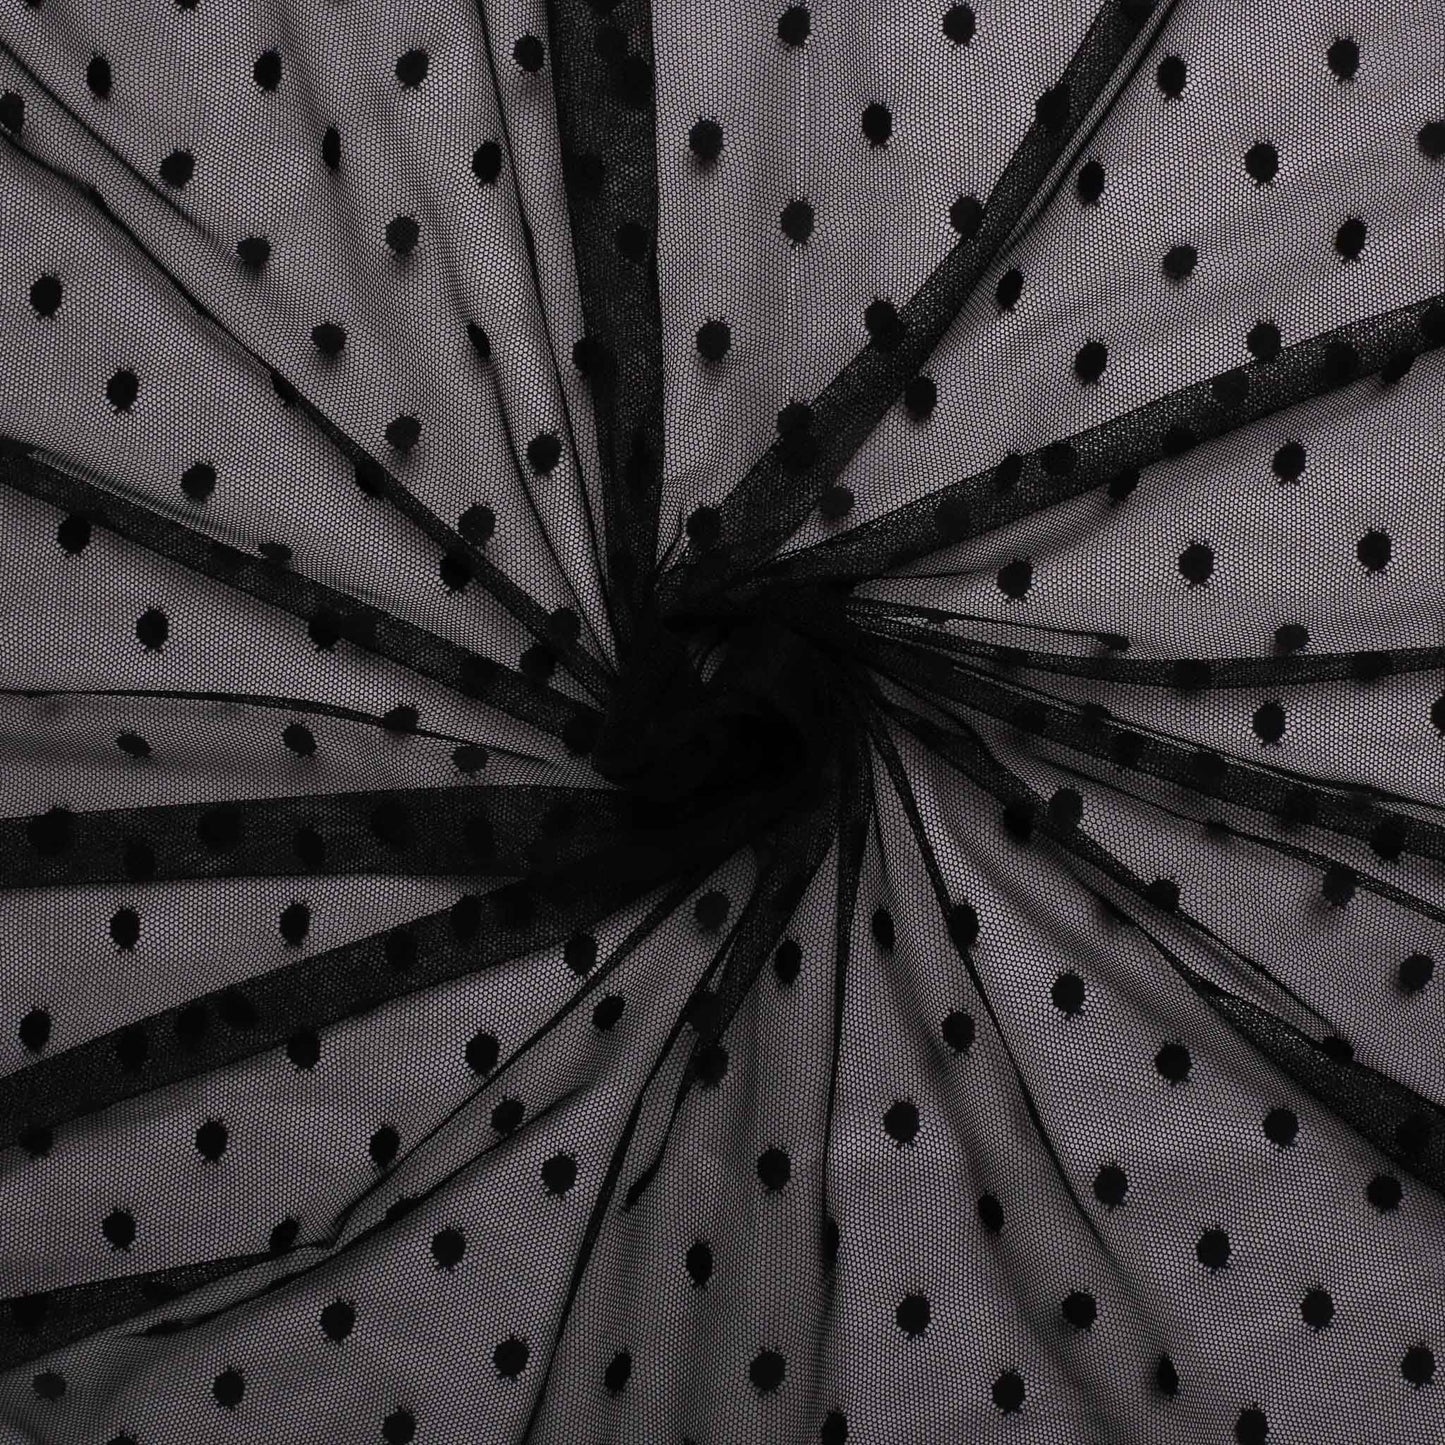 black netting mesh fabric with polka dot pattern